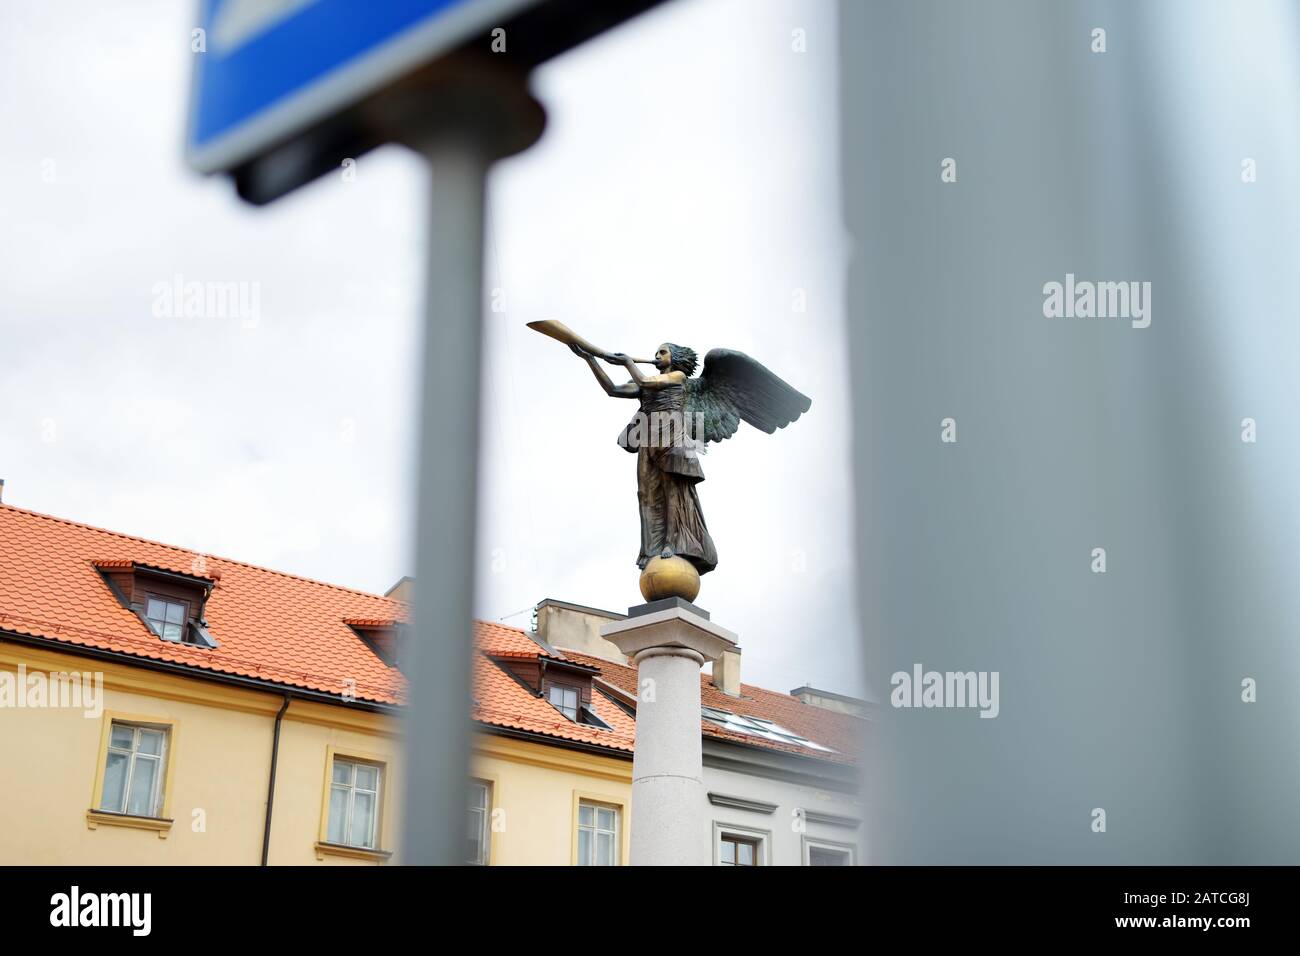 Uzupis Angel, famous statue of a trumpeting angel, symbol of Uzupis district of Vilnius, Lithuania. Stock Photo